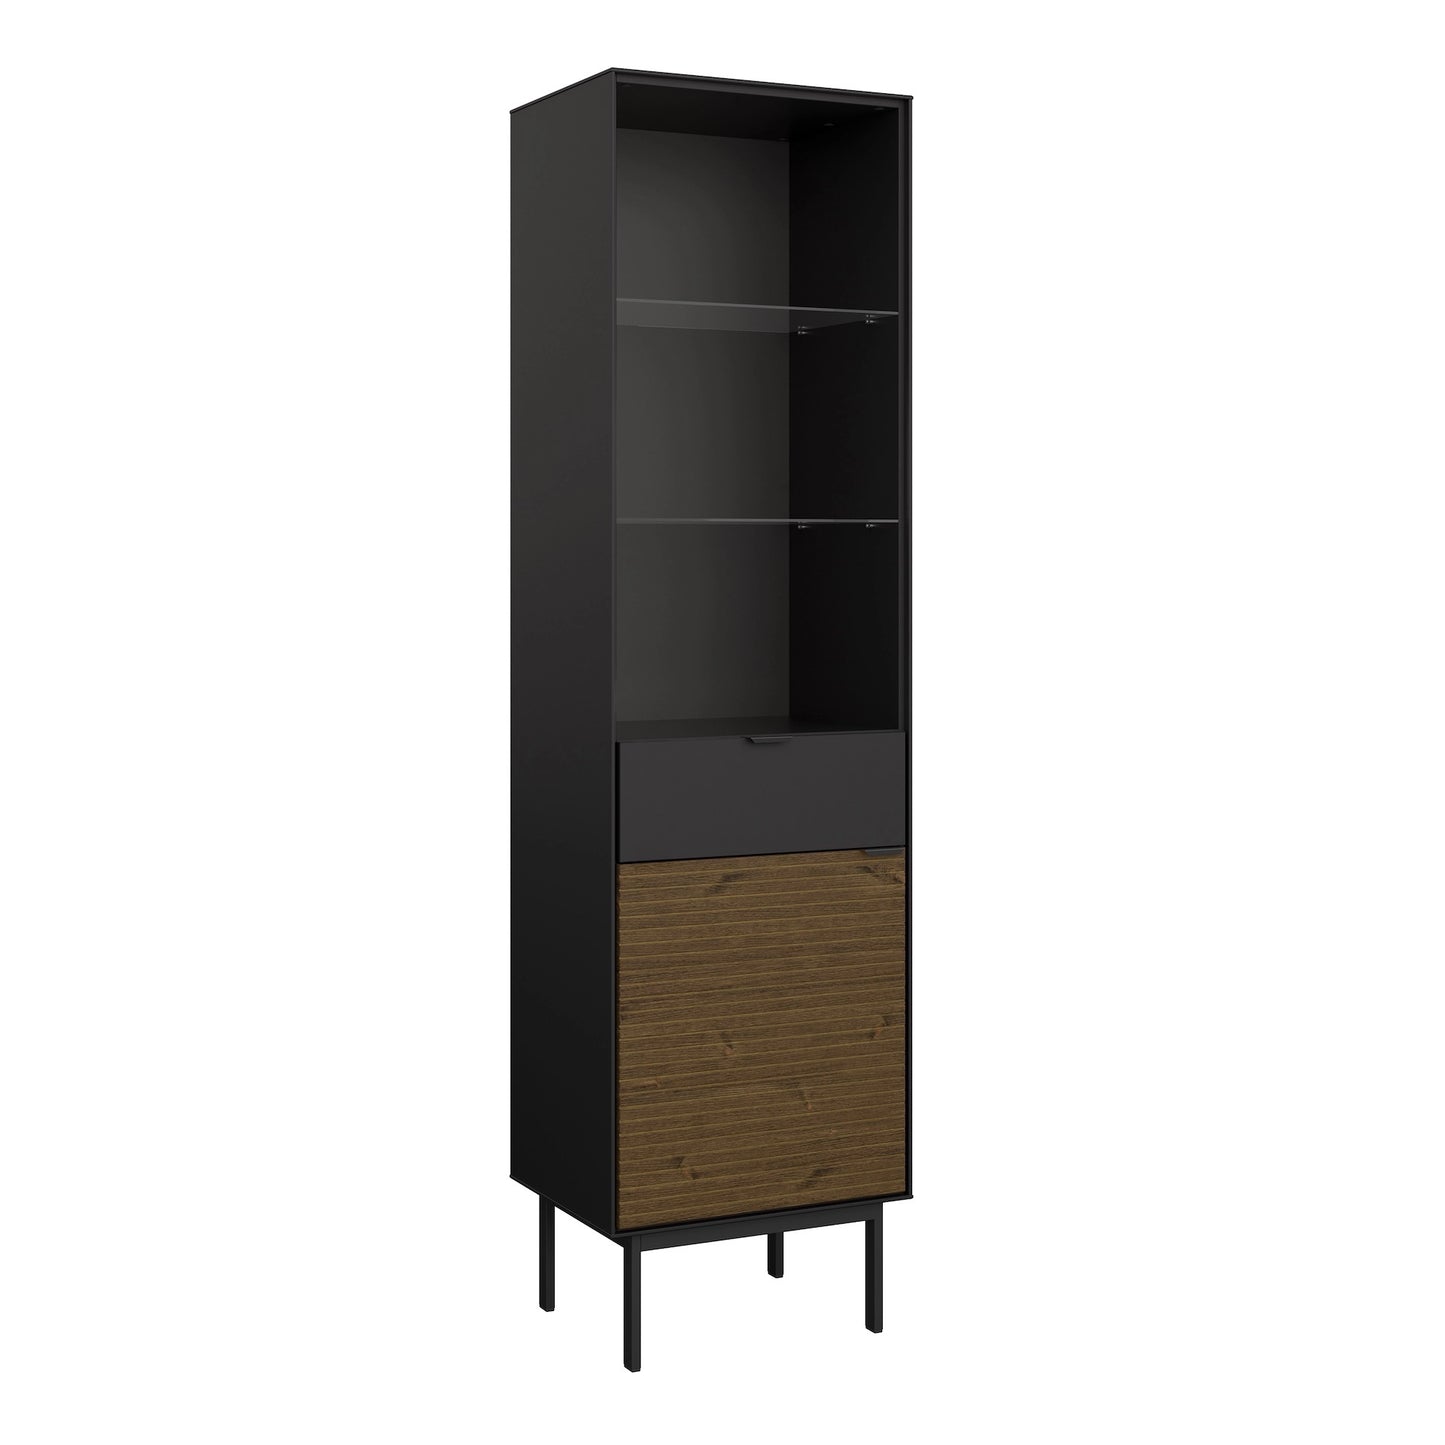 Furniture To Go Soma Showcase 1 Door + 1 Drawer, Granulated Black Brushed Espresso